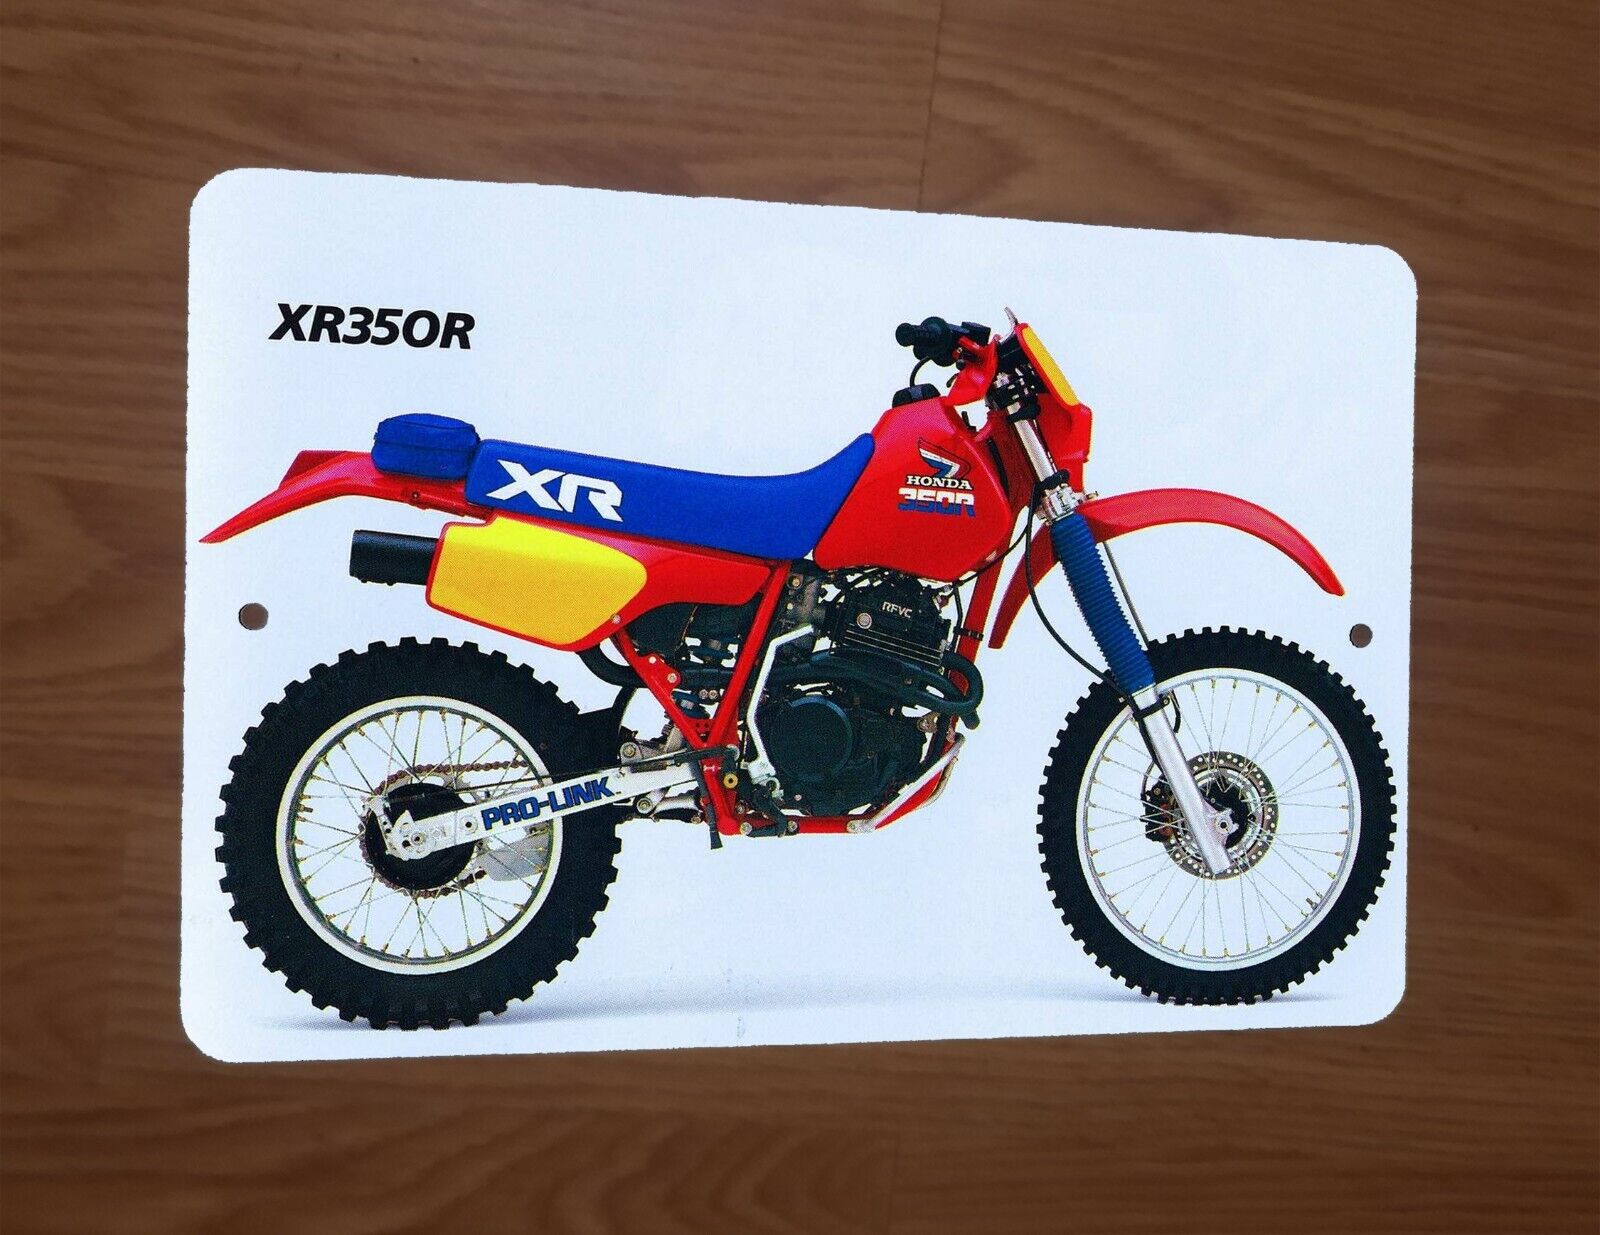 1985 Honda XR350R  Motocross Motorcycle Dirt Bike Photo 8x12 Metal Wall Sign